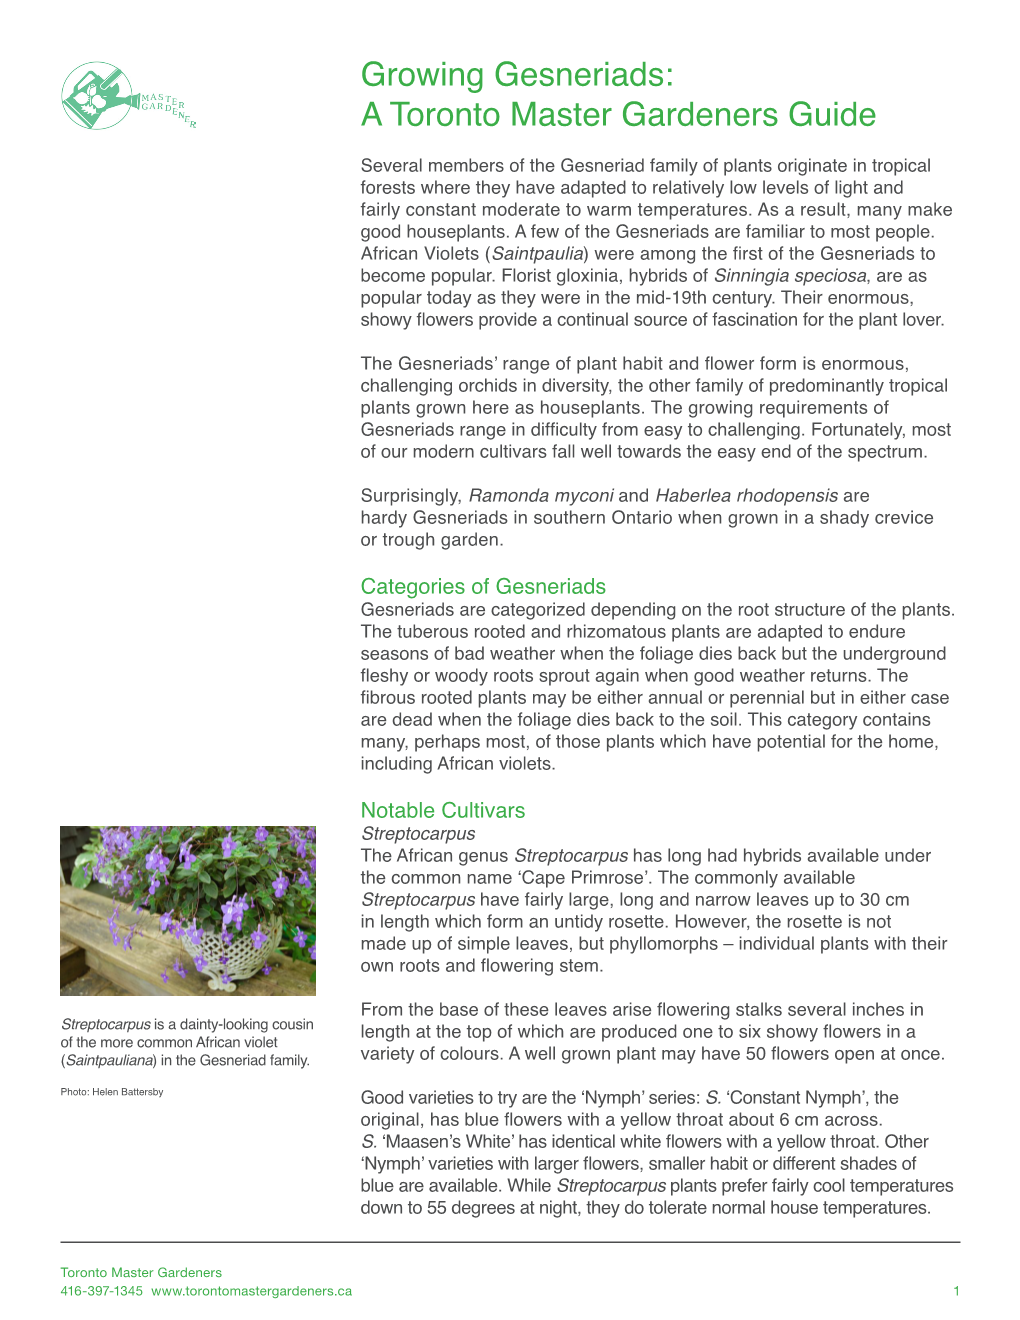 Growing Gesneriads: a Toronto Master Gardeners Guide